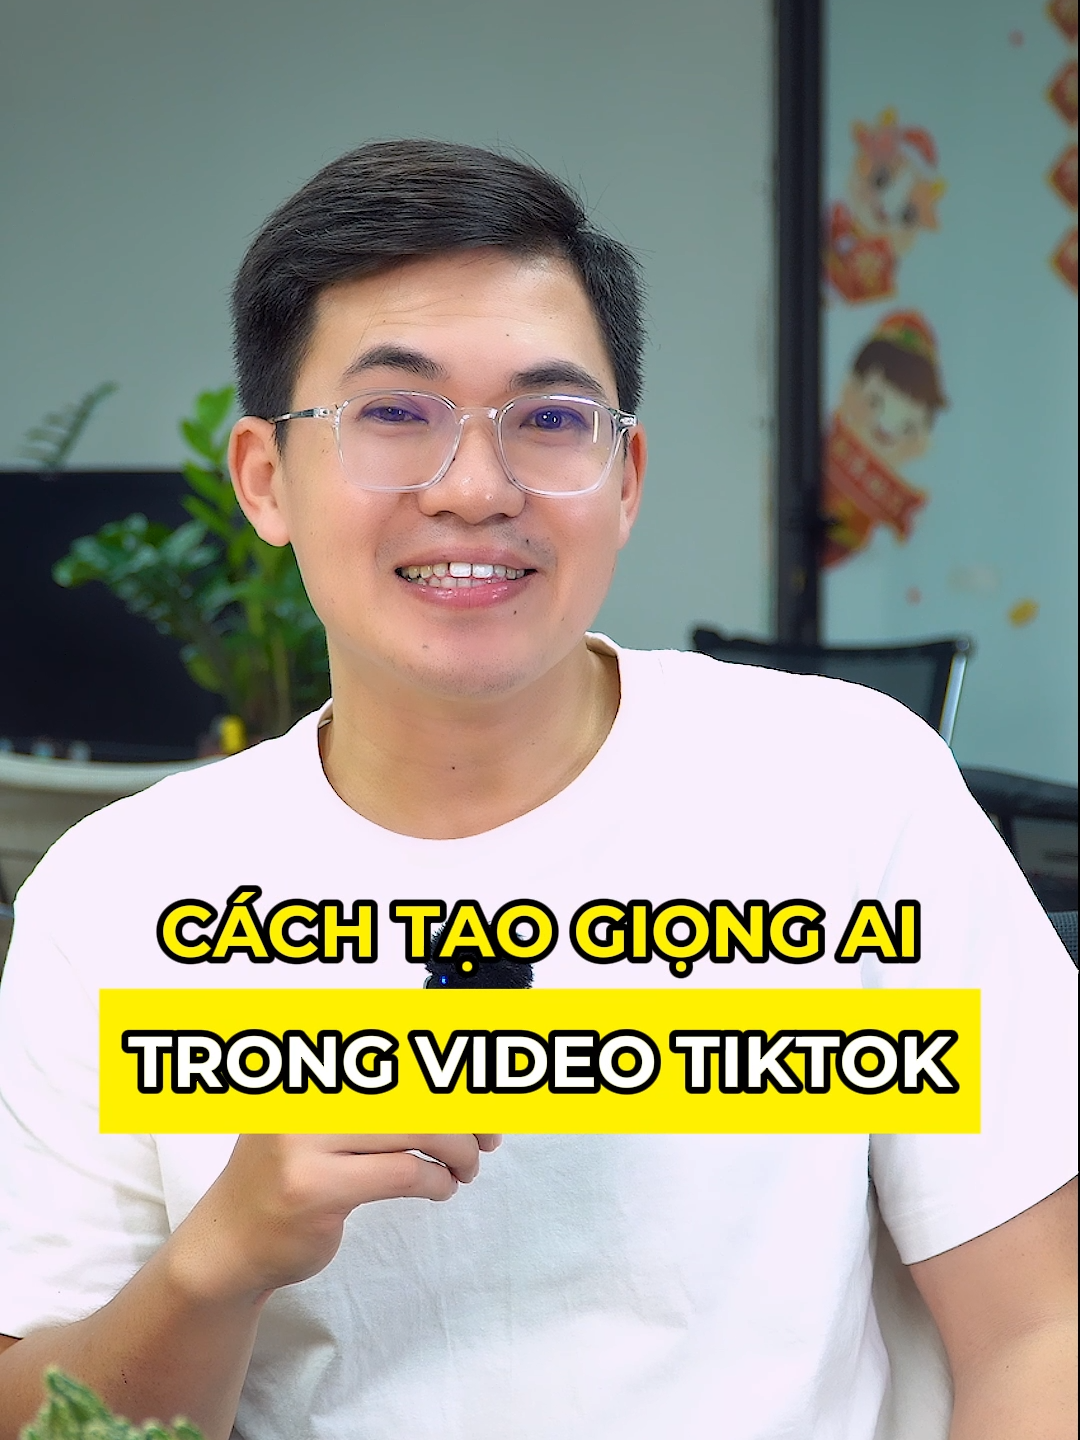 Hướng dẫn cách lồng giọng AI khi làm video TikTok #thanhvuecom #kinhdoanhonline #banhangonline #banhangtiktok #affiliatemarketing #ecommerce